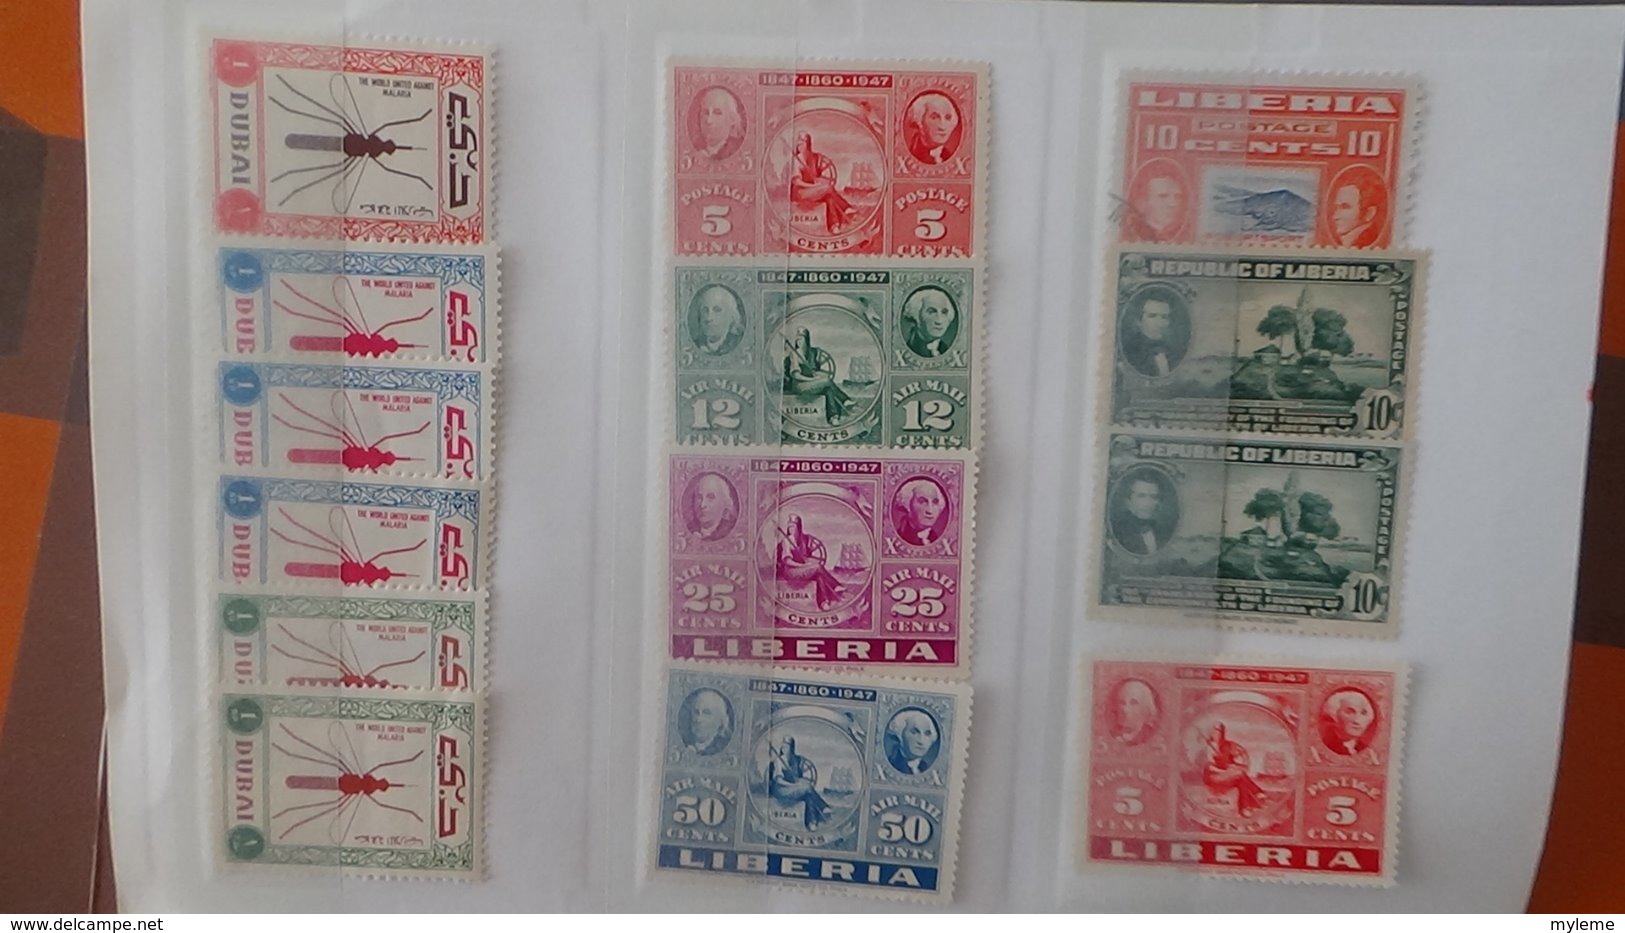 Carnets à choix de timbres anciens. Très sympa !!!